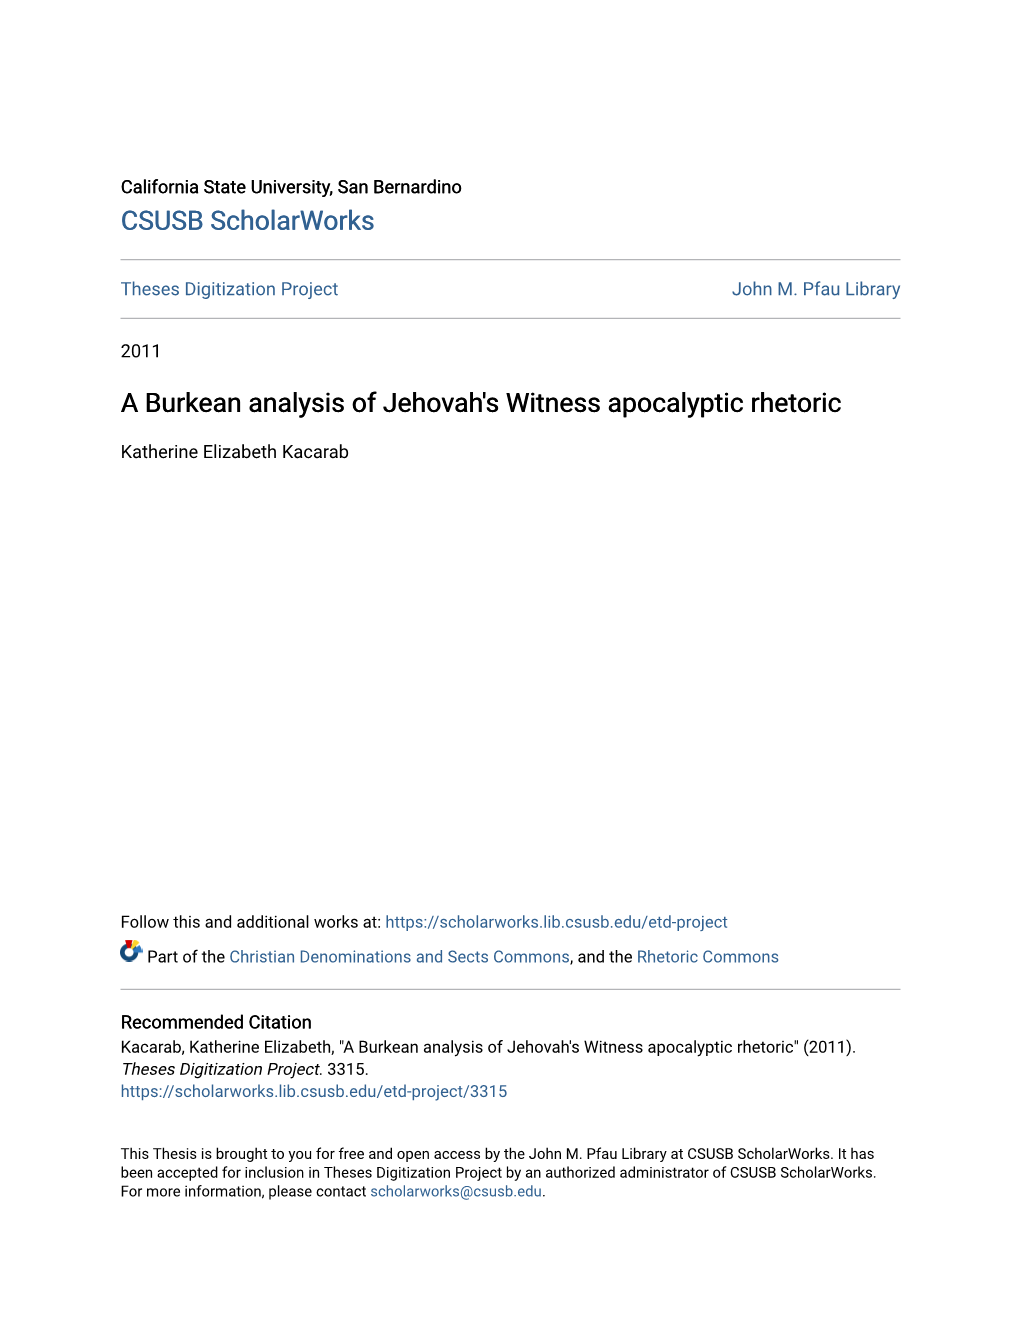 A Burkean Analysis of Jehovah's Witness Apocalyptic Rhetoric